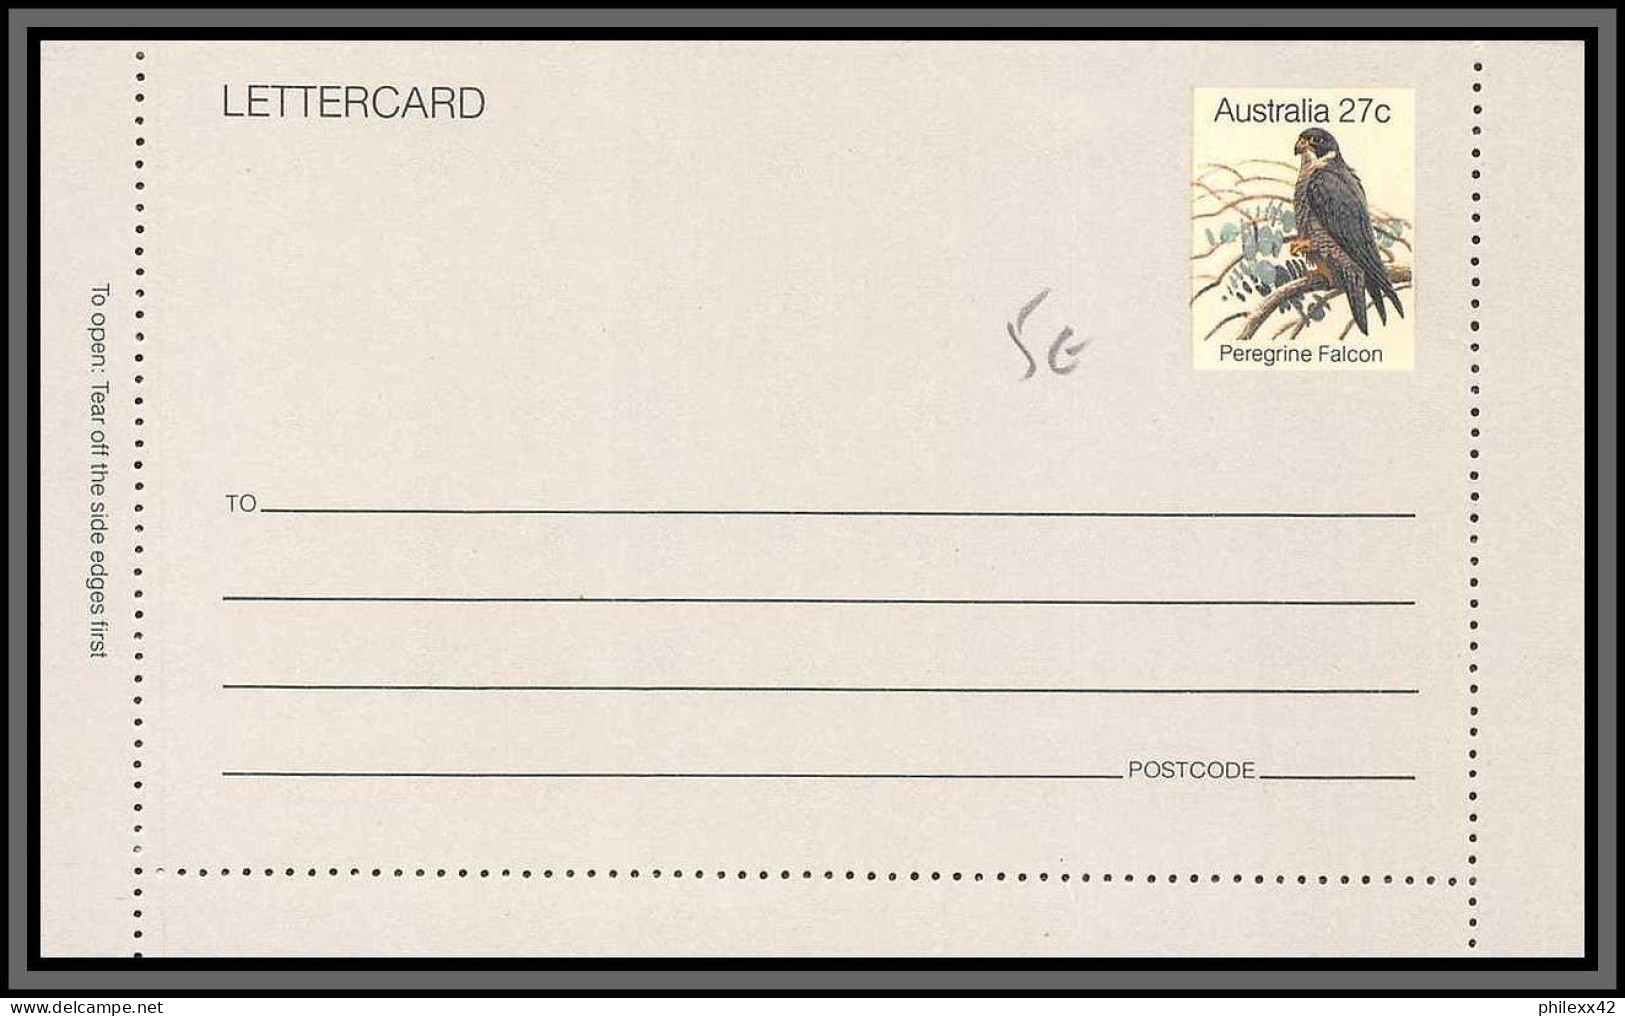 11247 PEREGRINE FALCON Faucon Pèlerin Neuf Tb Entier Stationery Letter Card Australie Australia  - Ganzsachen